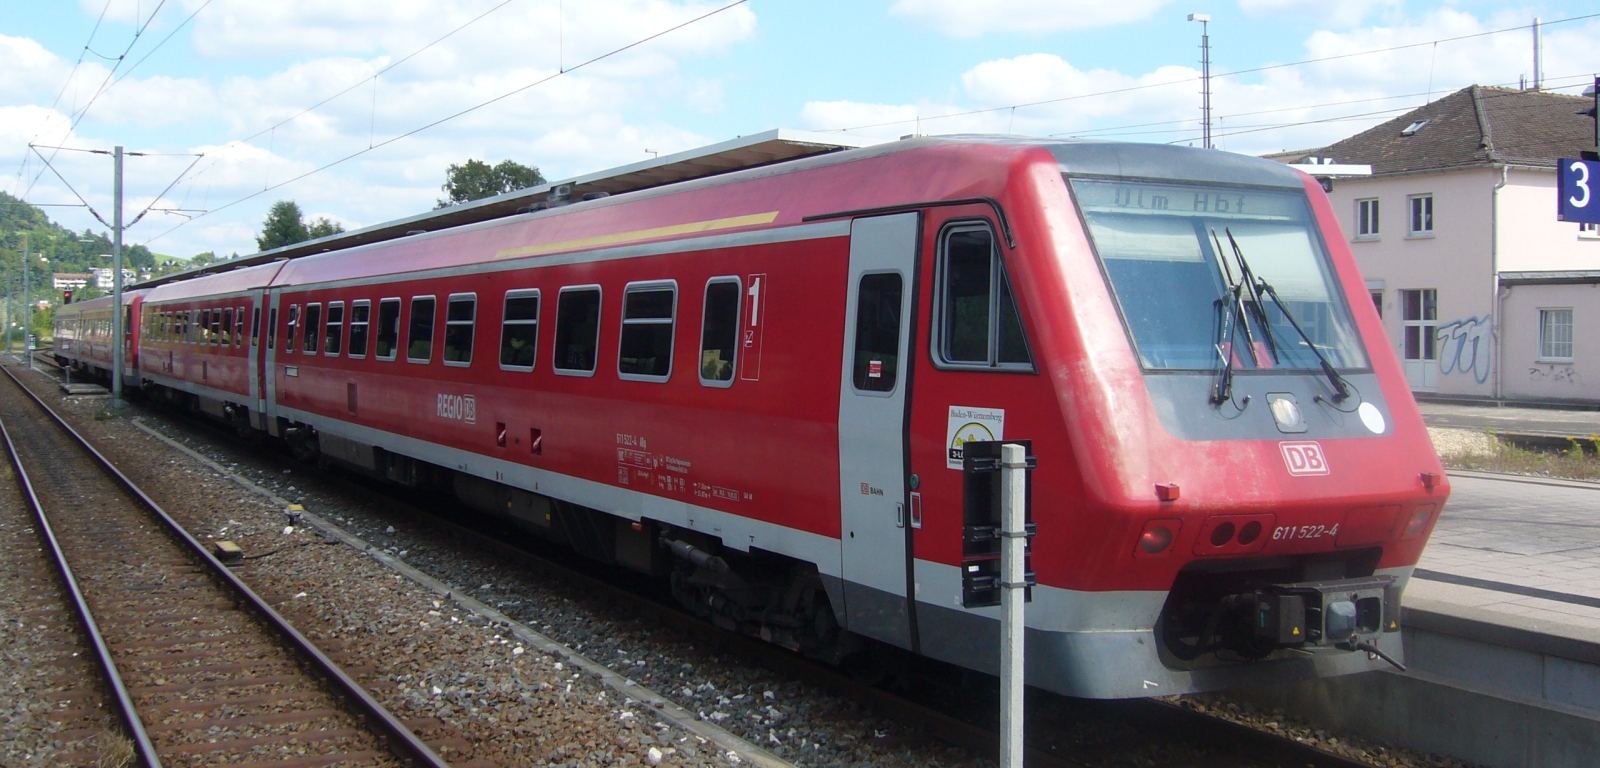 Commuter train in Tuttlingen station